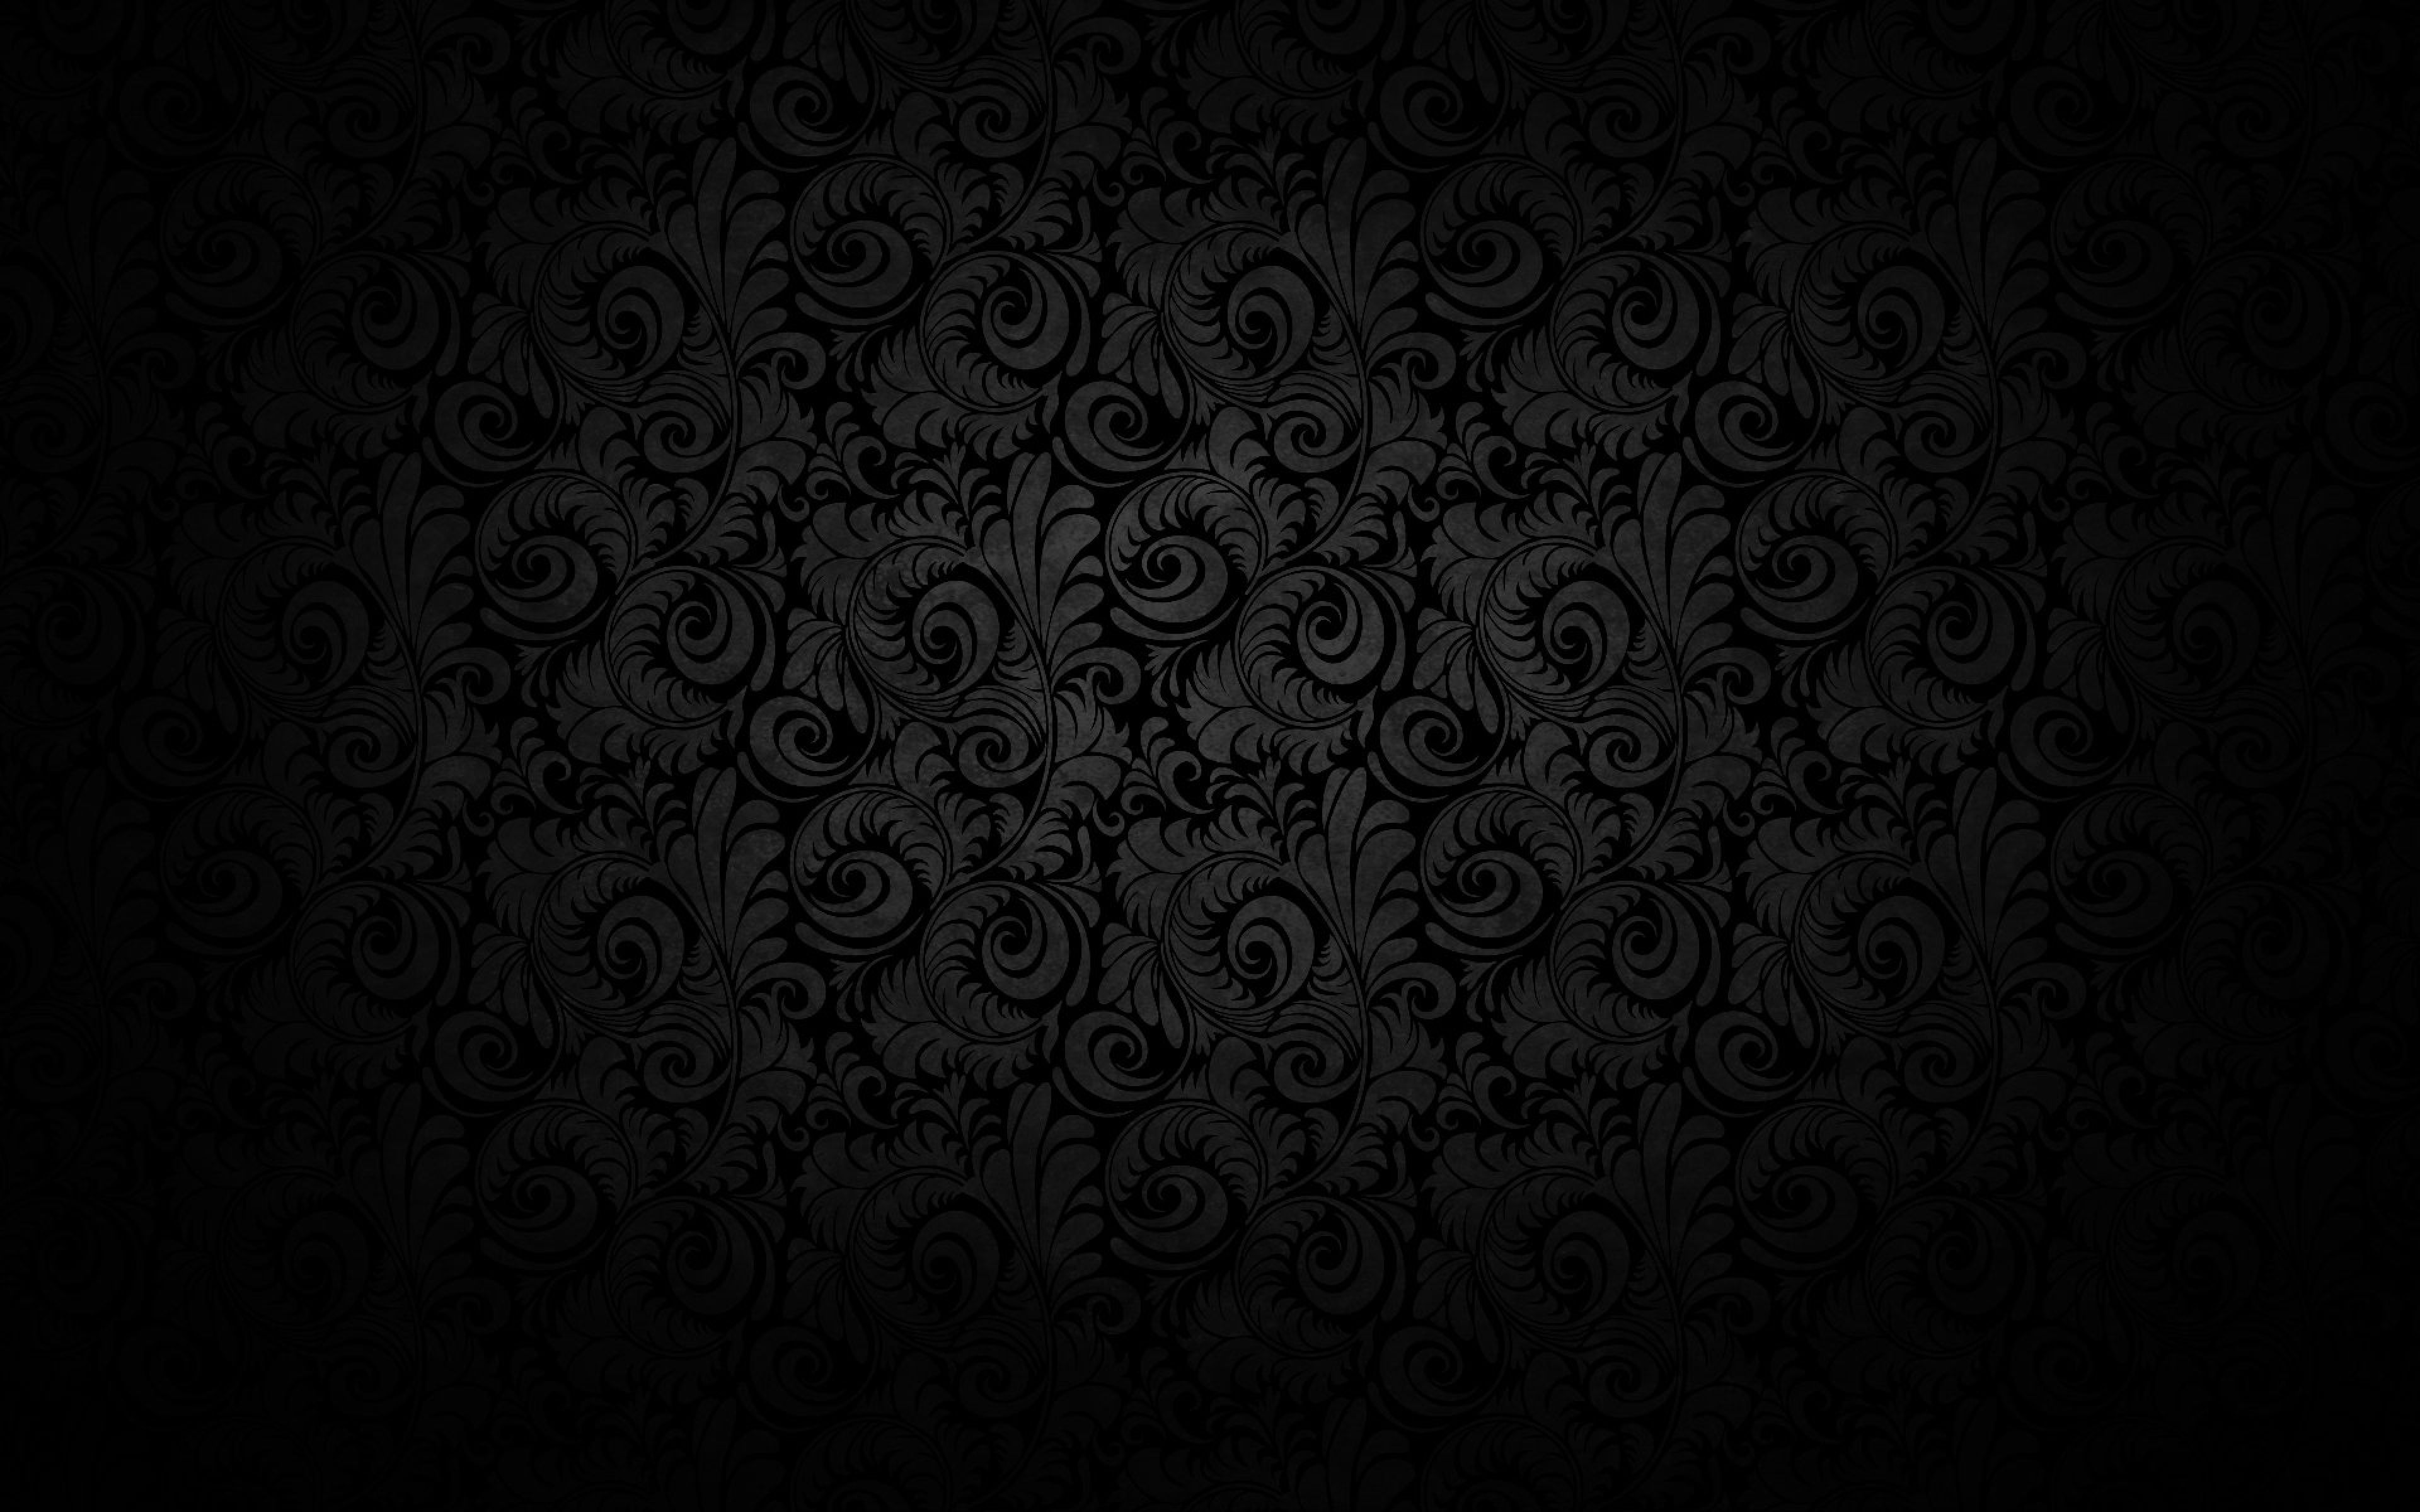 Download free Dark Textured Scp Logo Wallpaper 